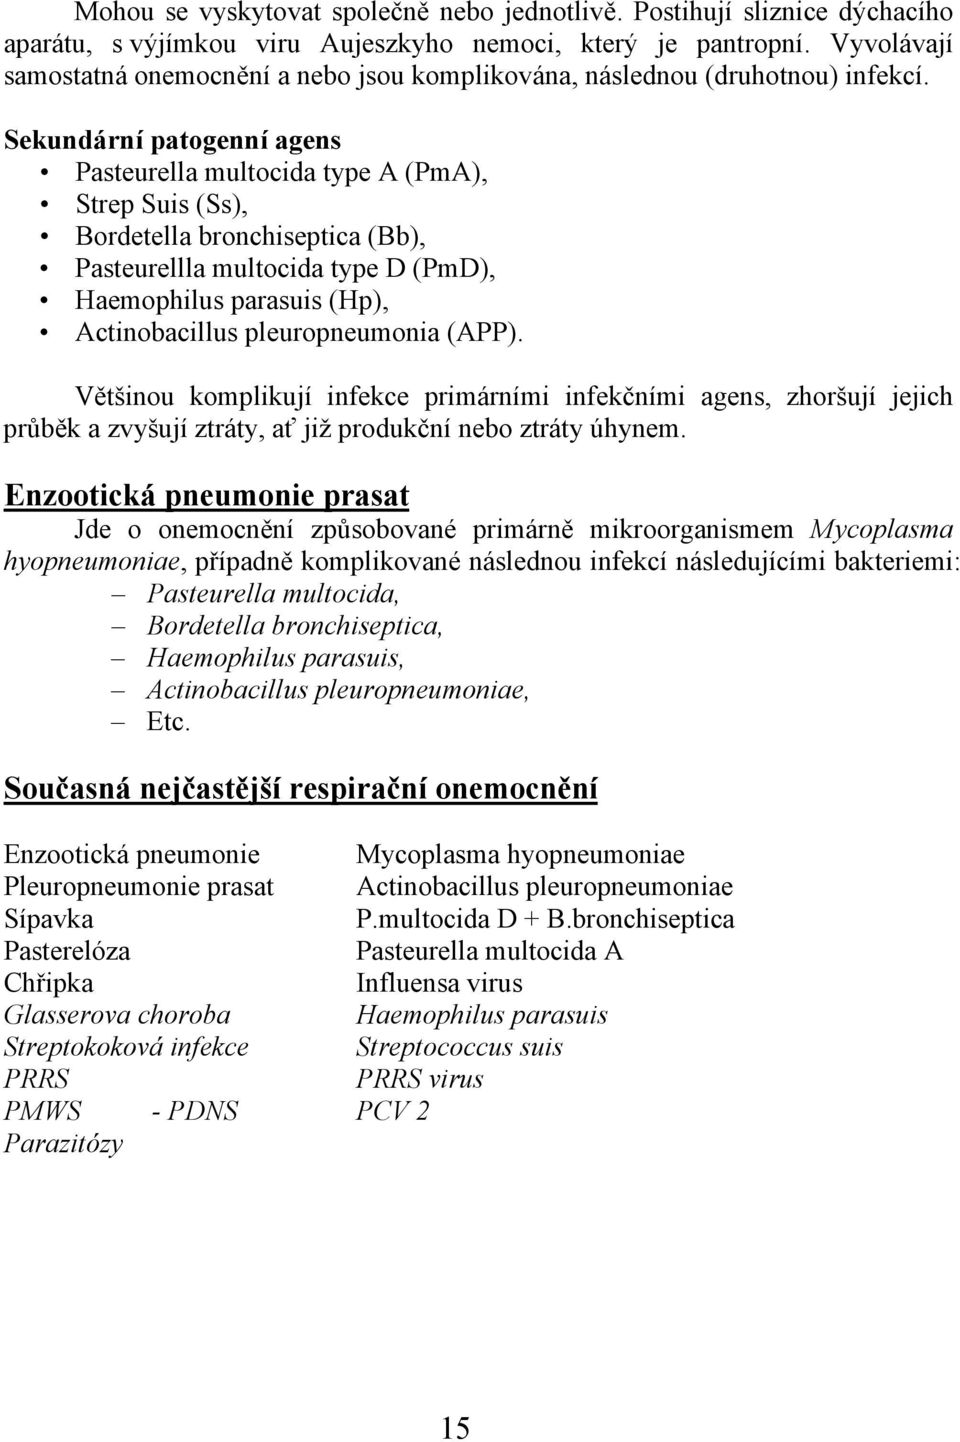 Sekundární patogenní agens Pasteurella multocida type A (PmA), Strep Suis (Ss), Bordetella bronchiseptica (Bb), Pasteurellla multocida type D (PmD), Haemophilus parasuis (Hp), Actinobacillus